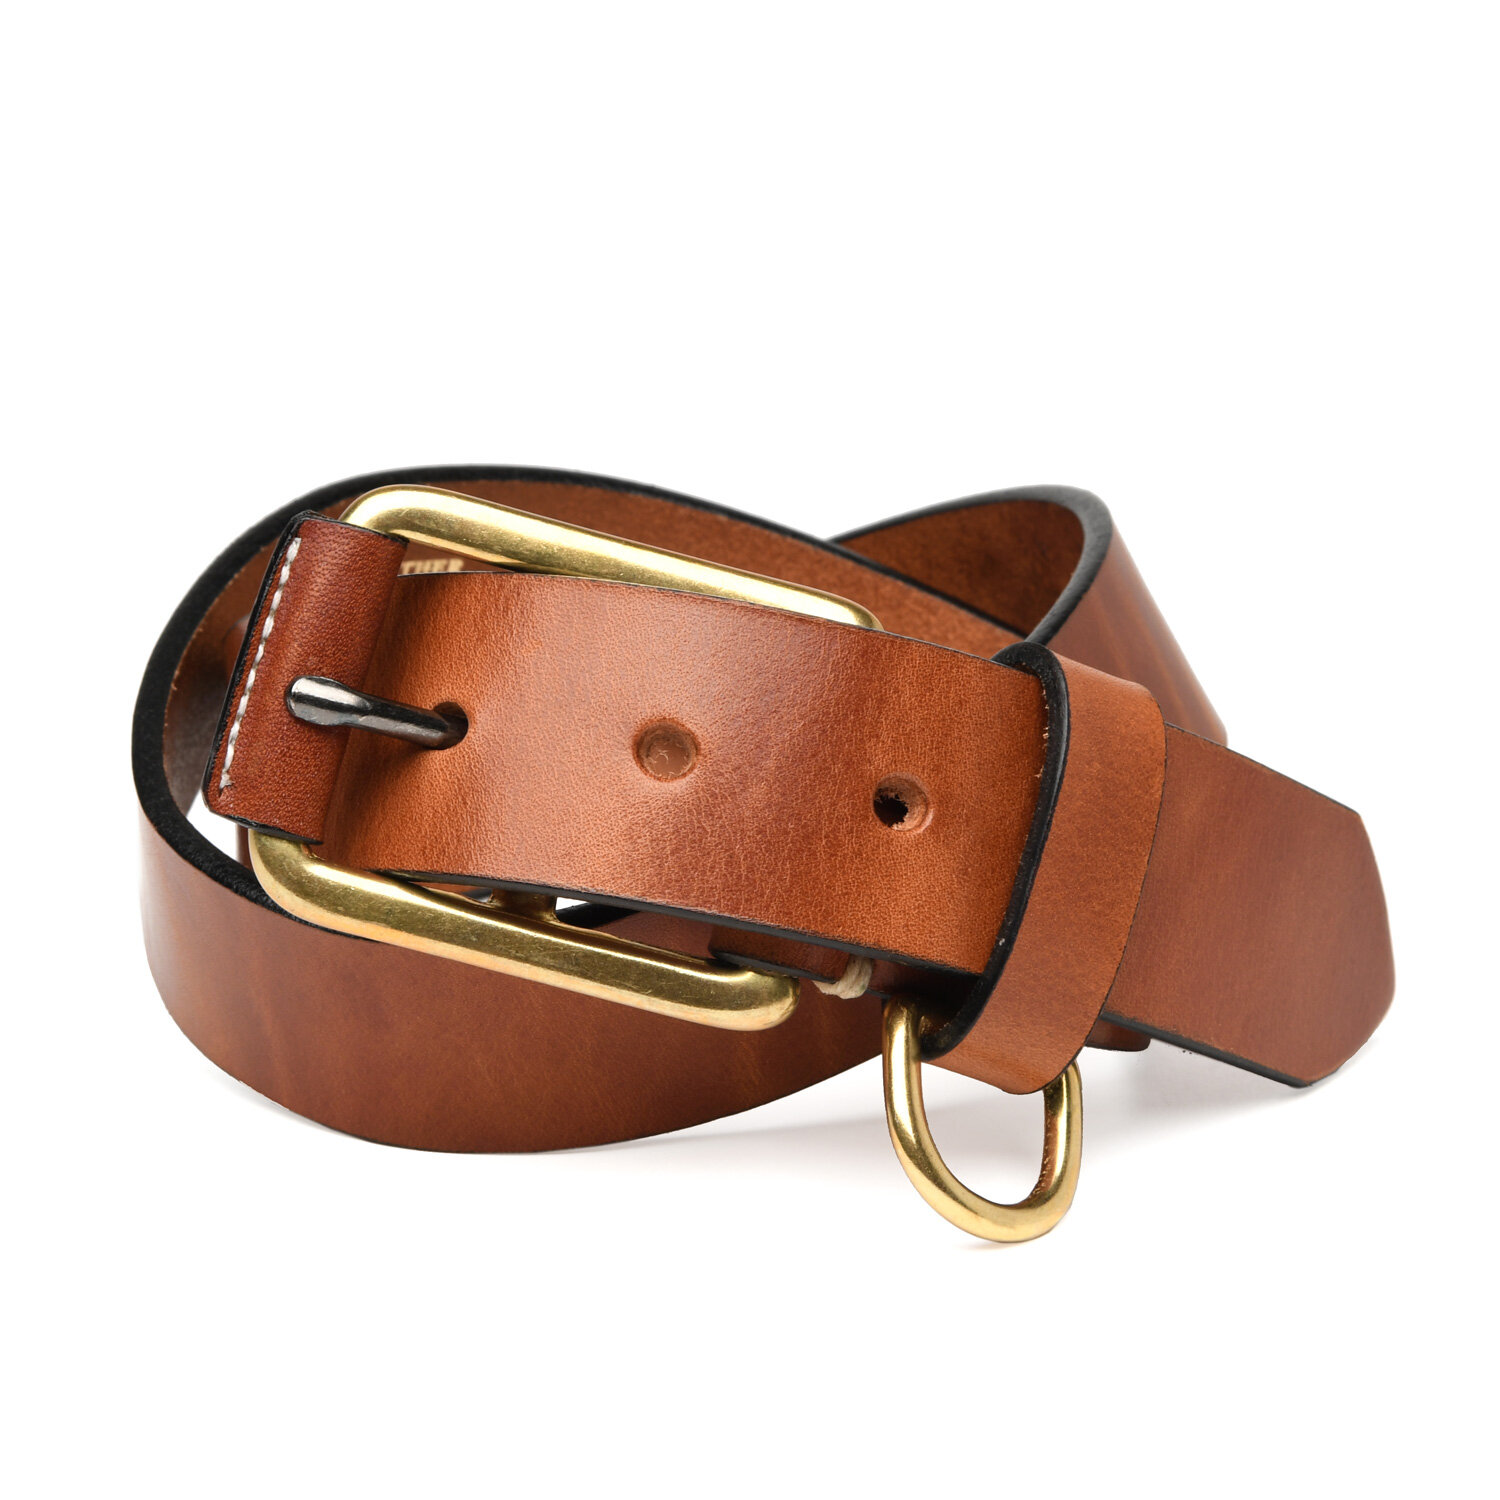 Stitched D-Ring Belt - FO G Brown — YUKETEN